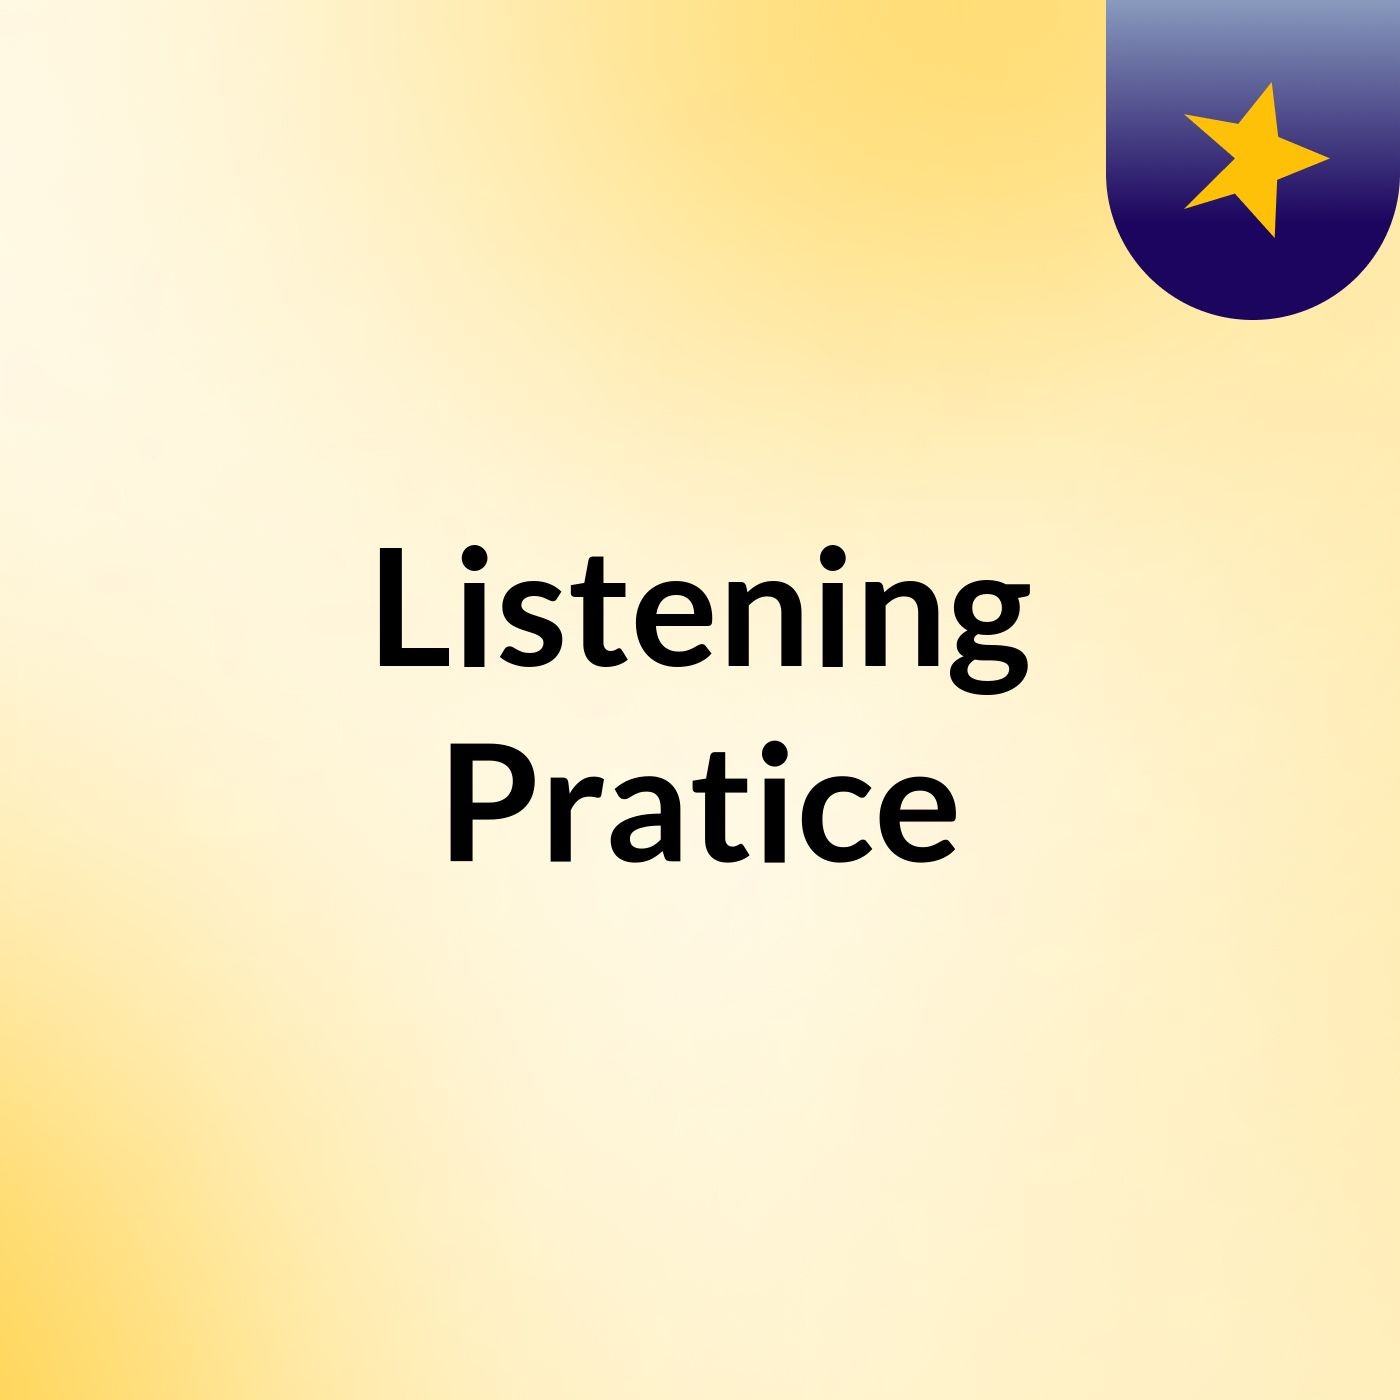 Listening Pratice